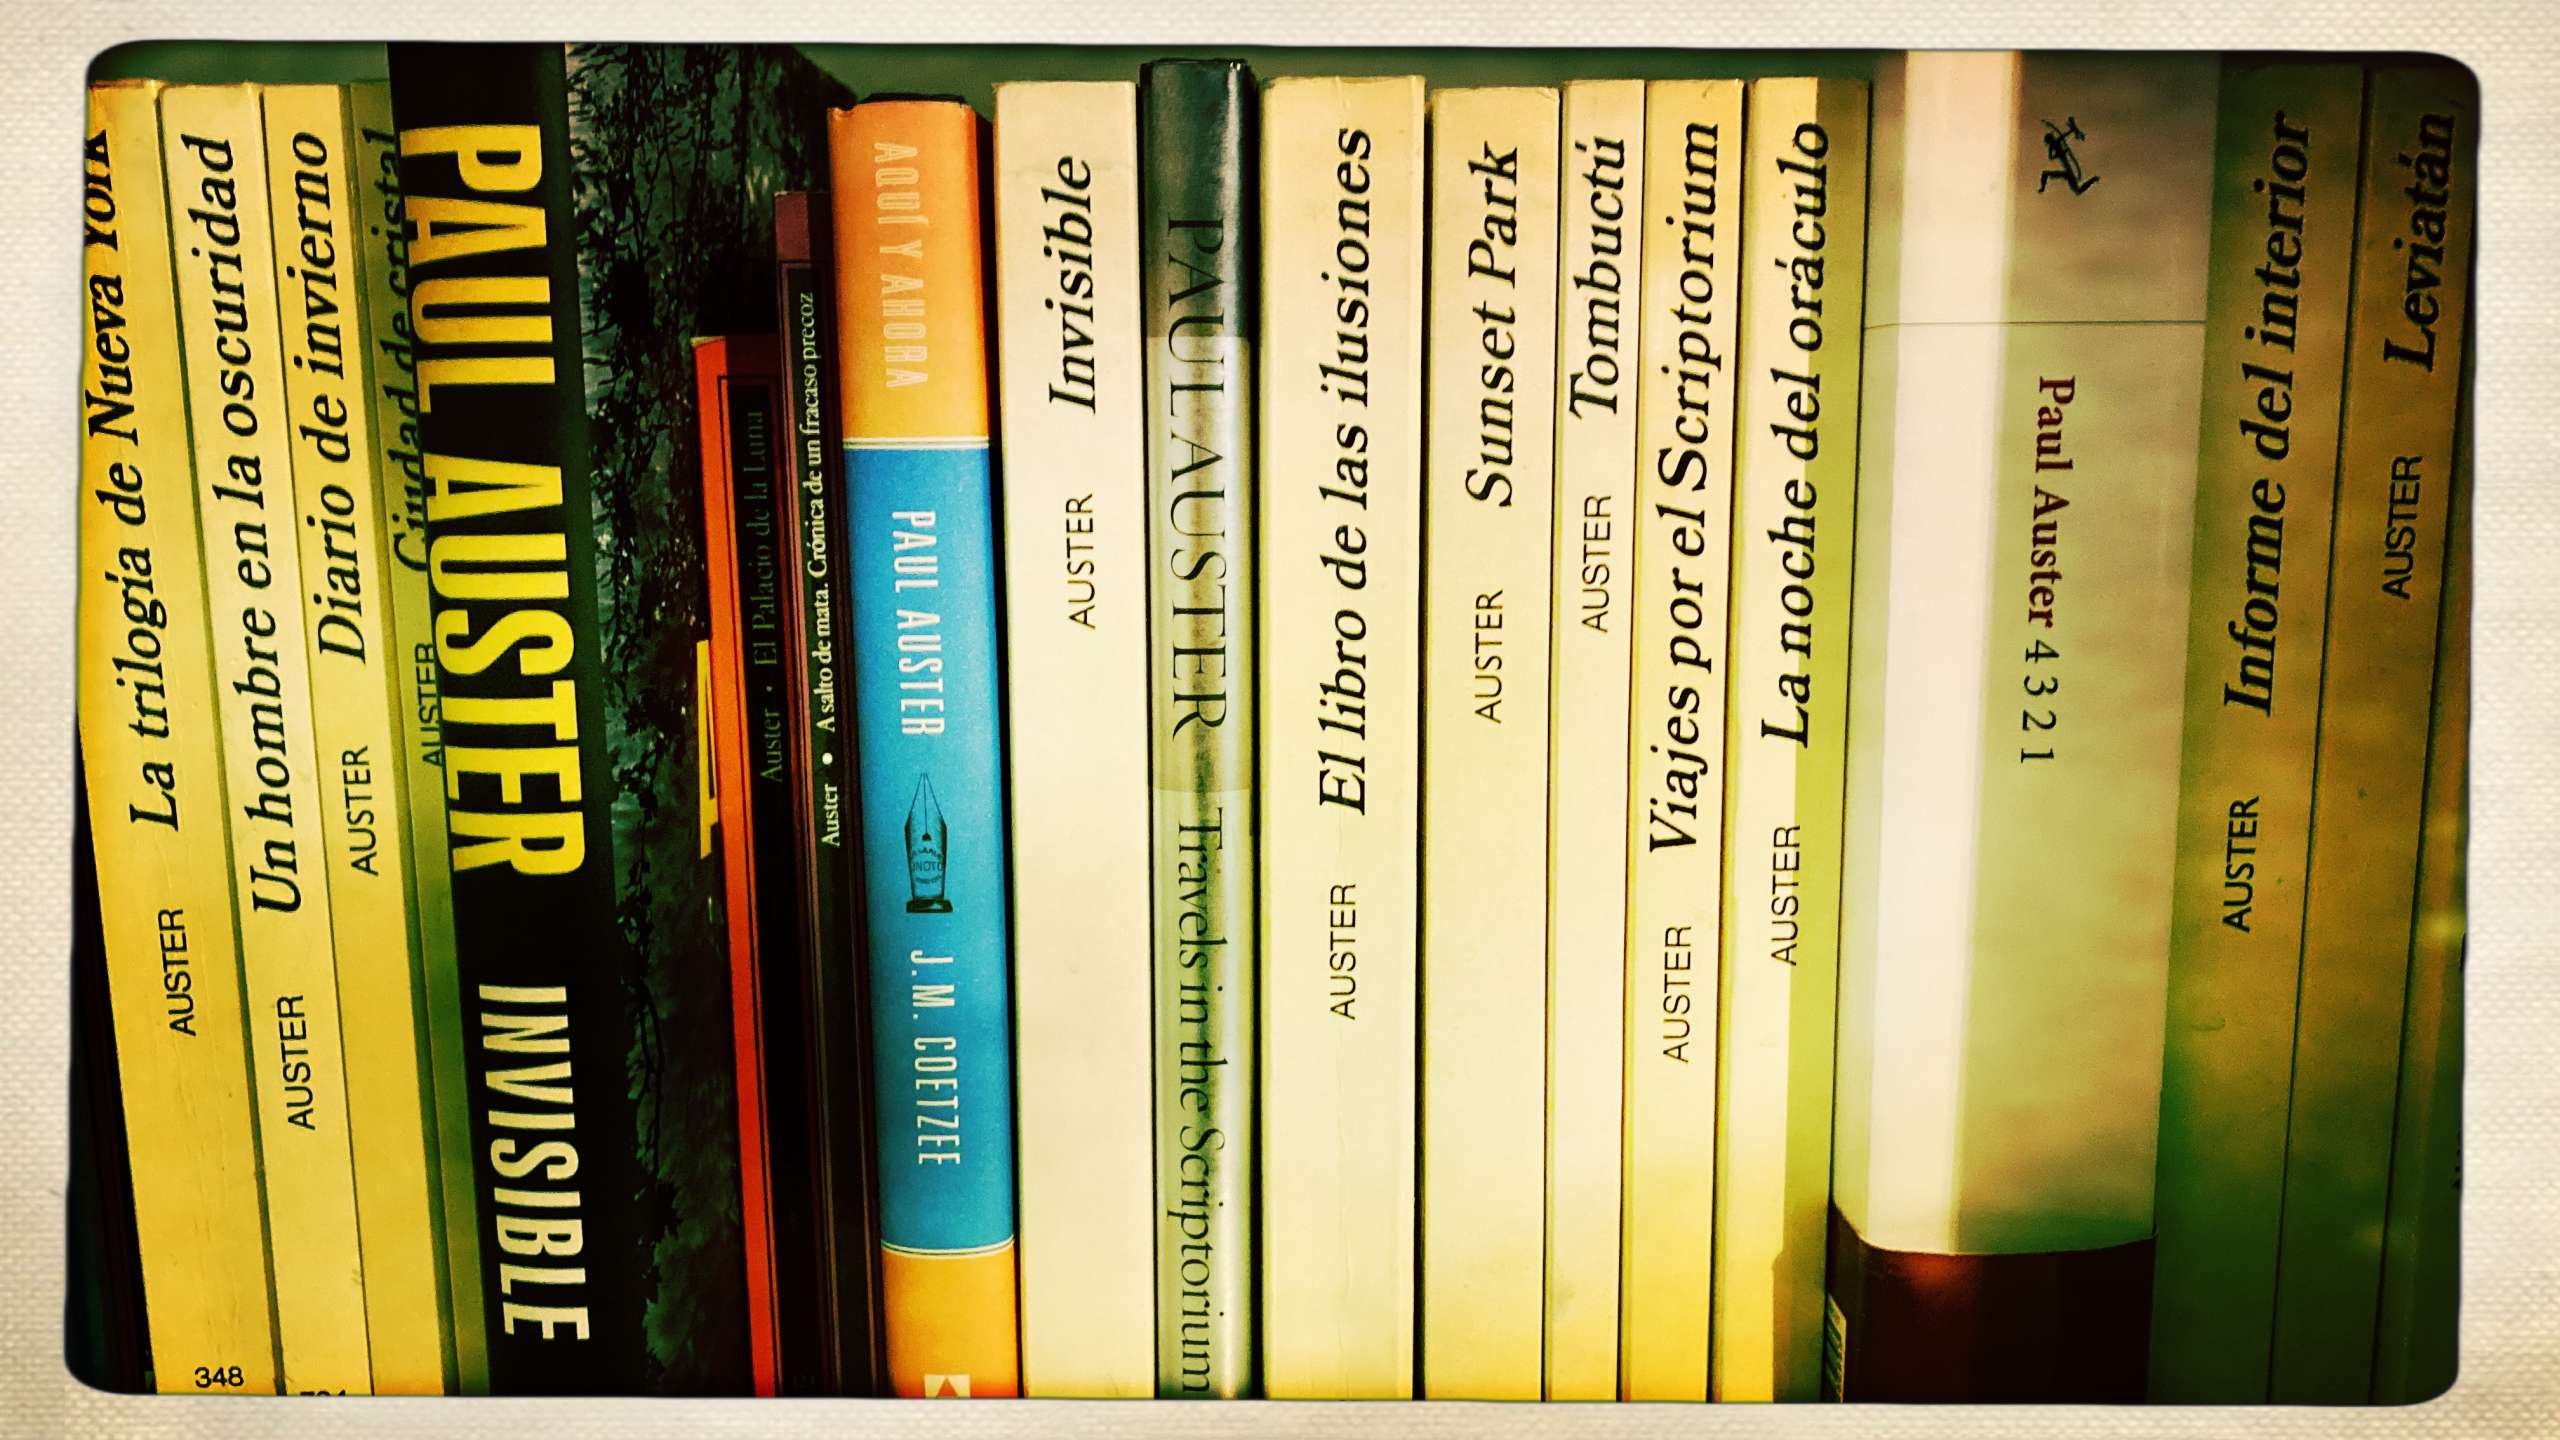 Libros de Paul Auster.